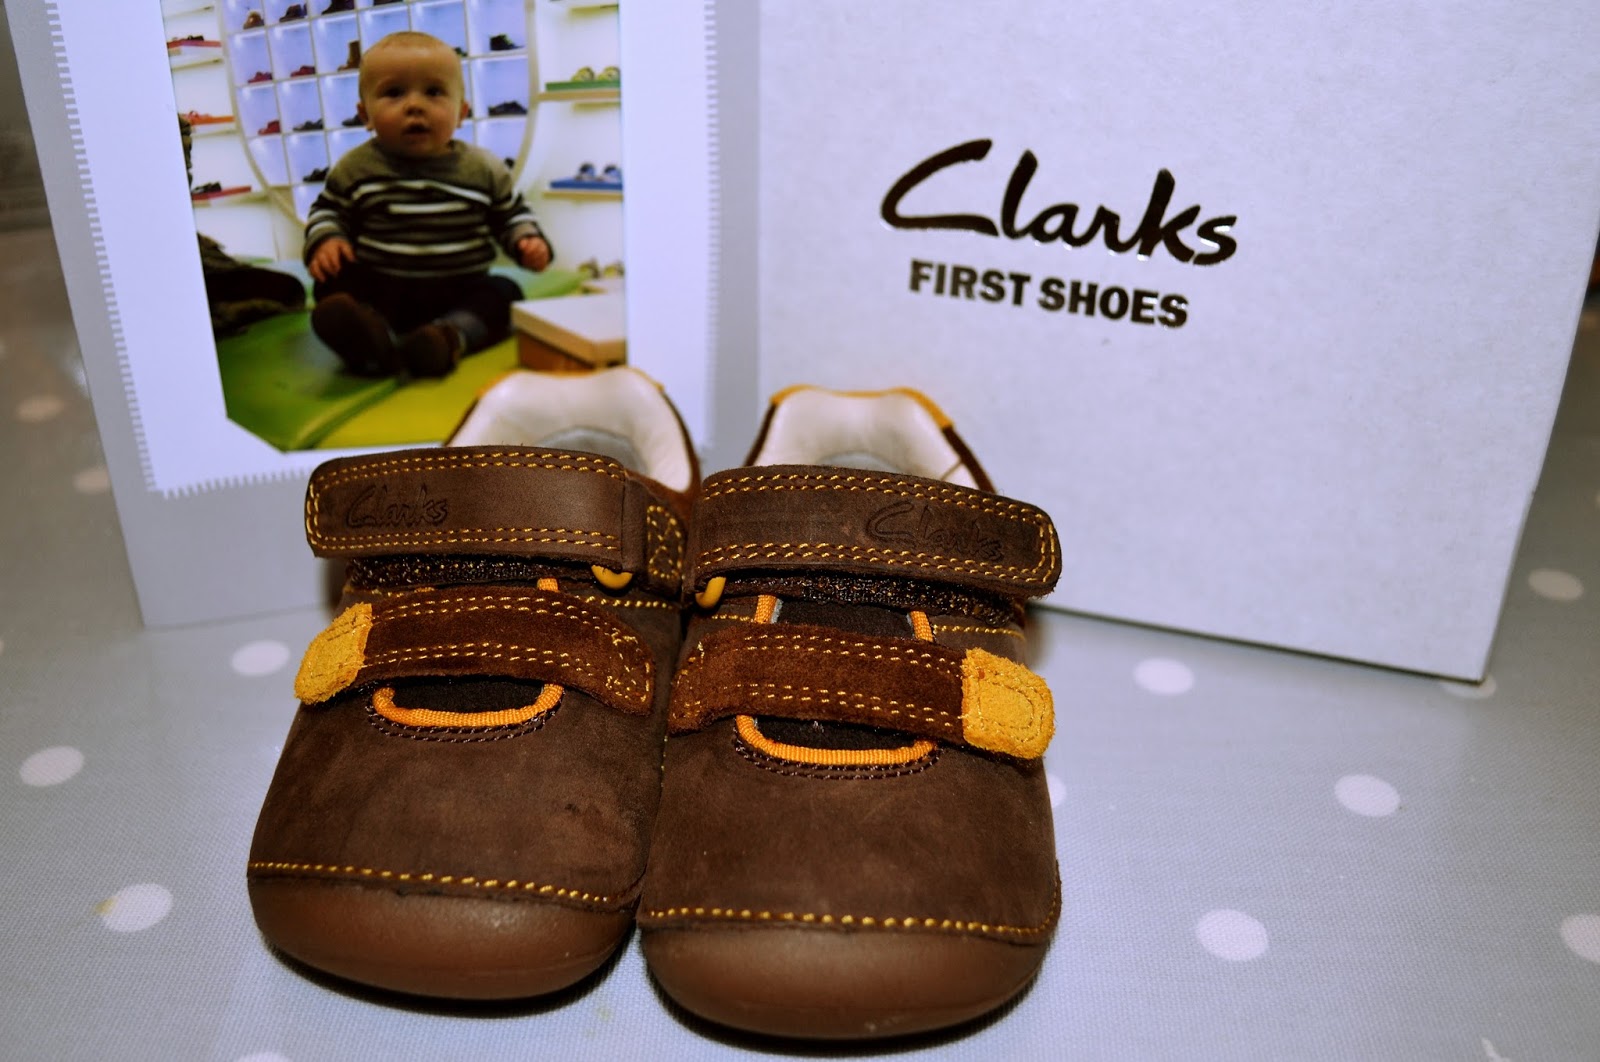 clarks 1st shoes